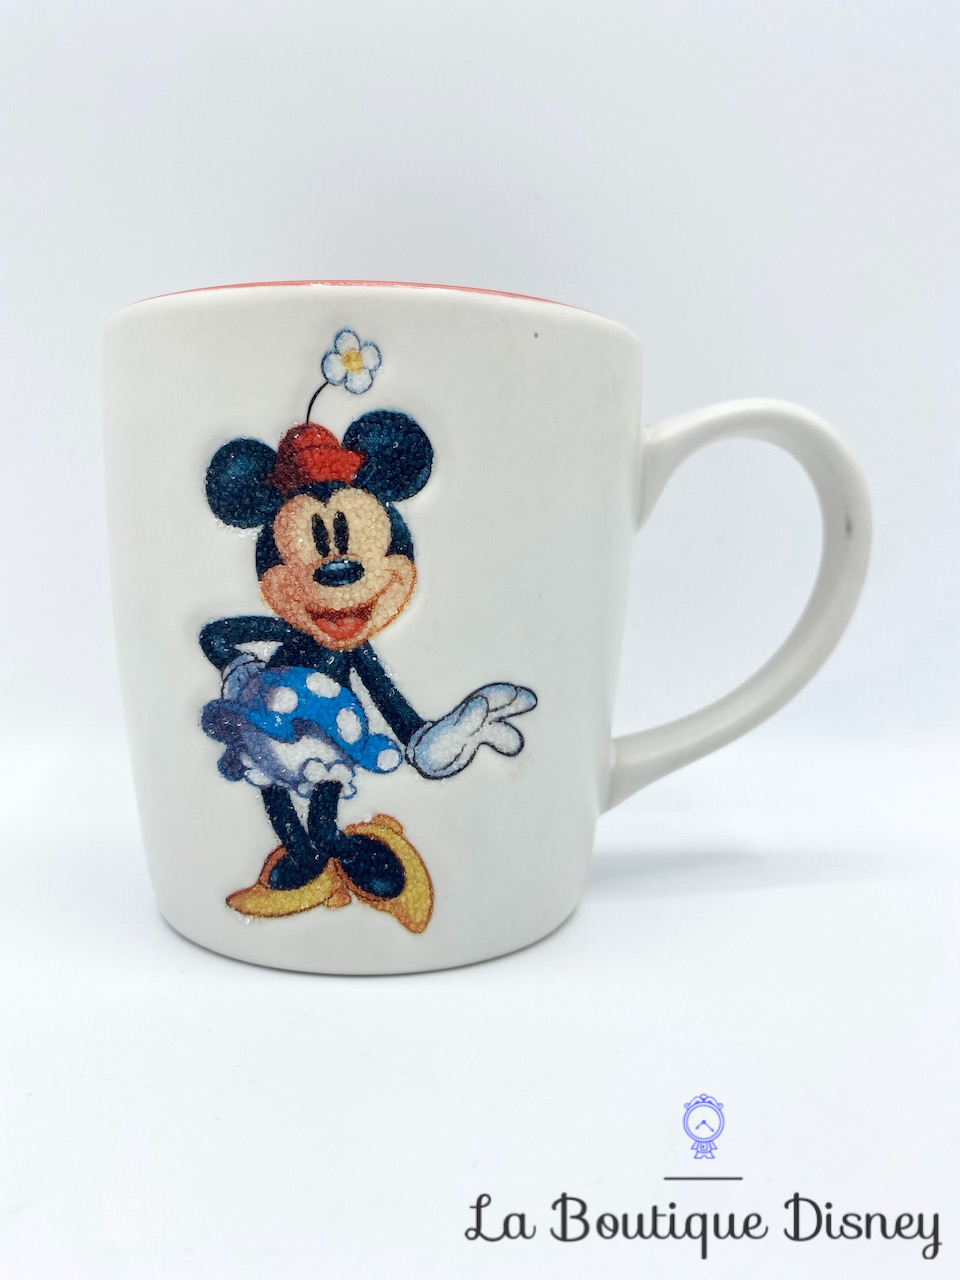 Tasse Minnie Mouse Disneyland Paris mug Disney blanc paillettes robe bleu fleur